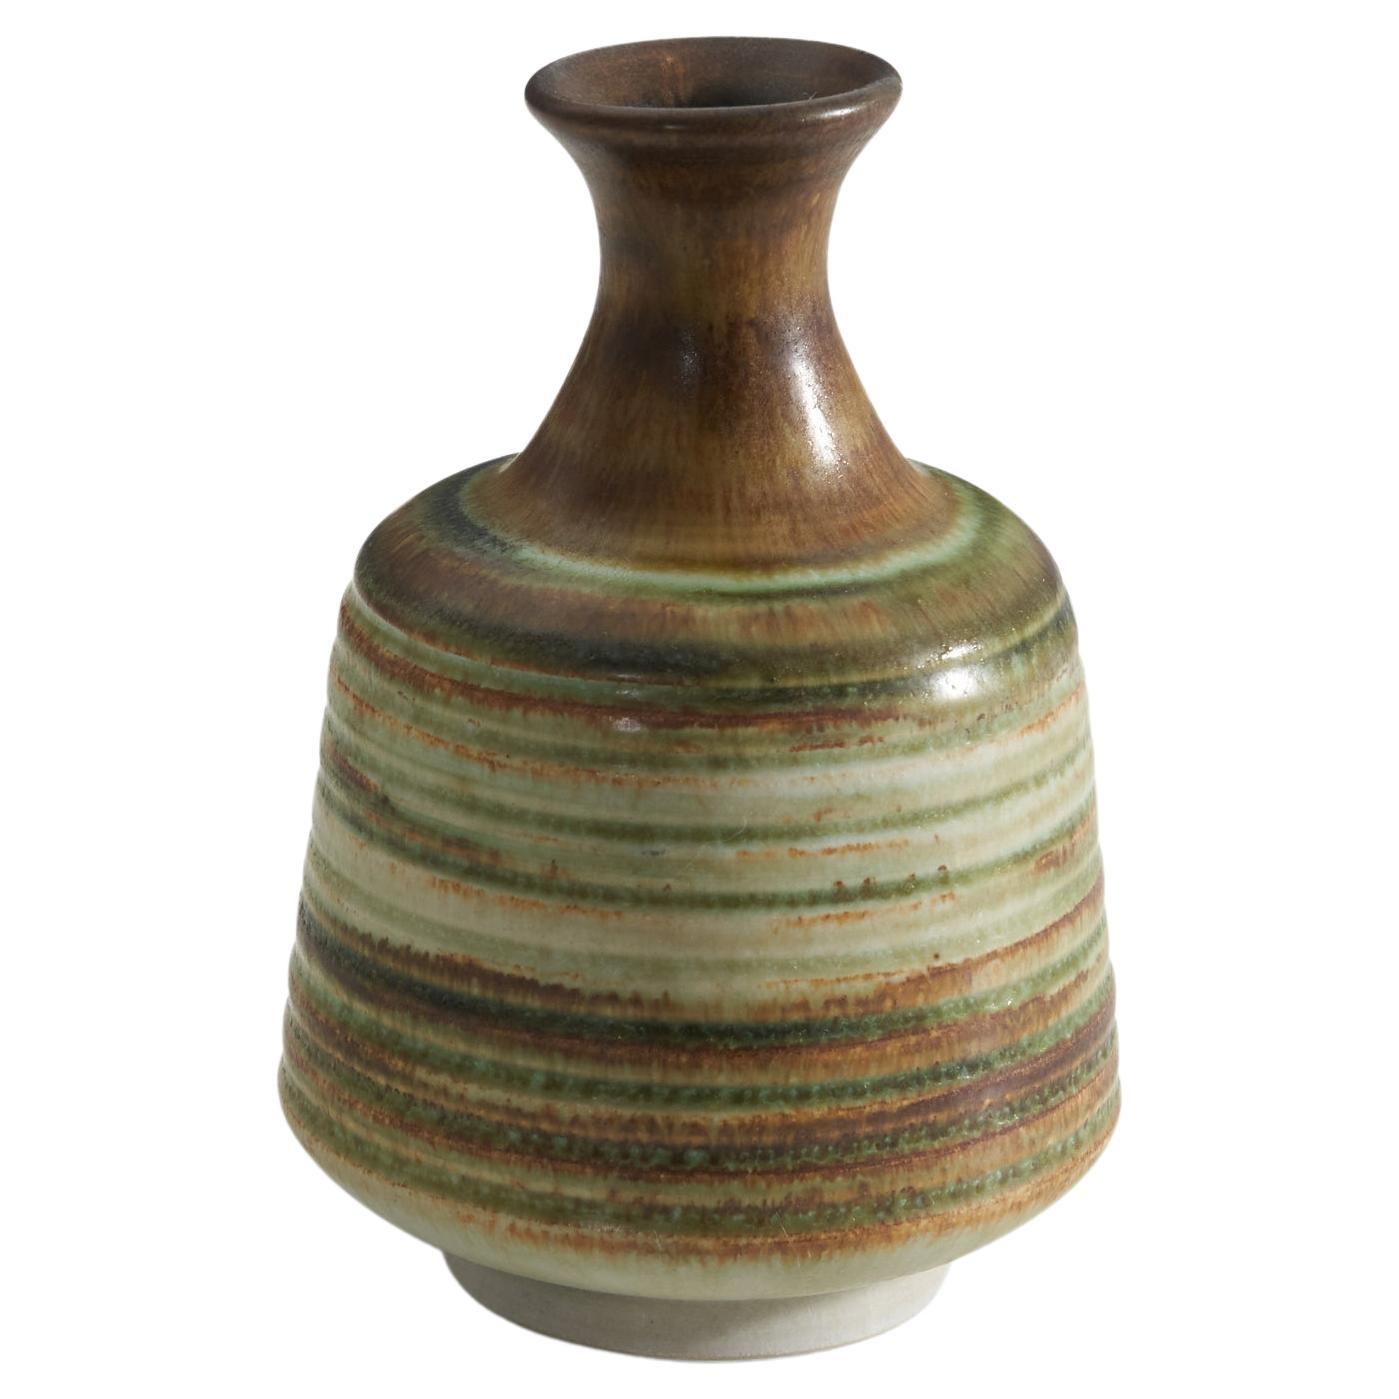 Höganas Keramik, Early Vase, Glazed Earthenware, Höganäs, Sweden, 1950s